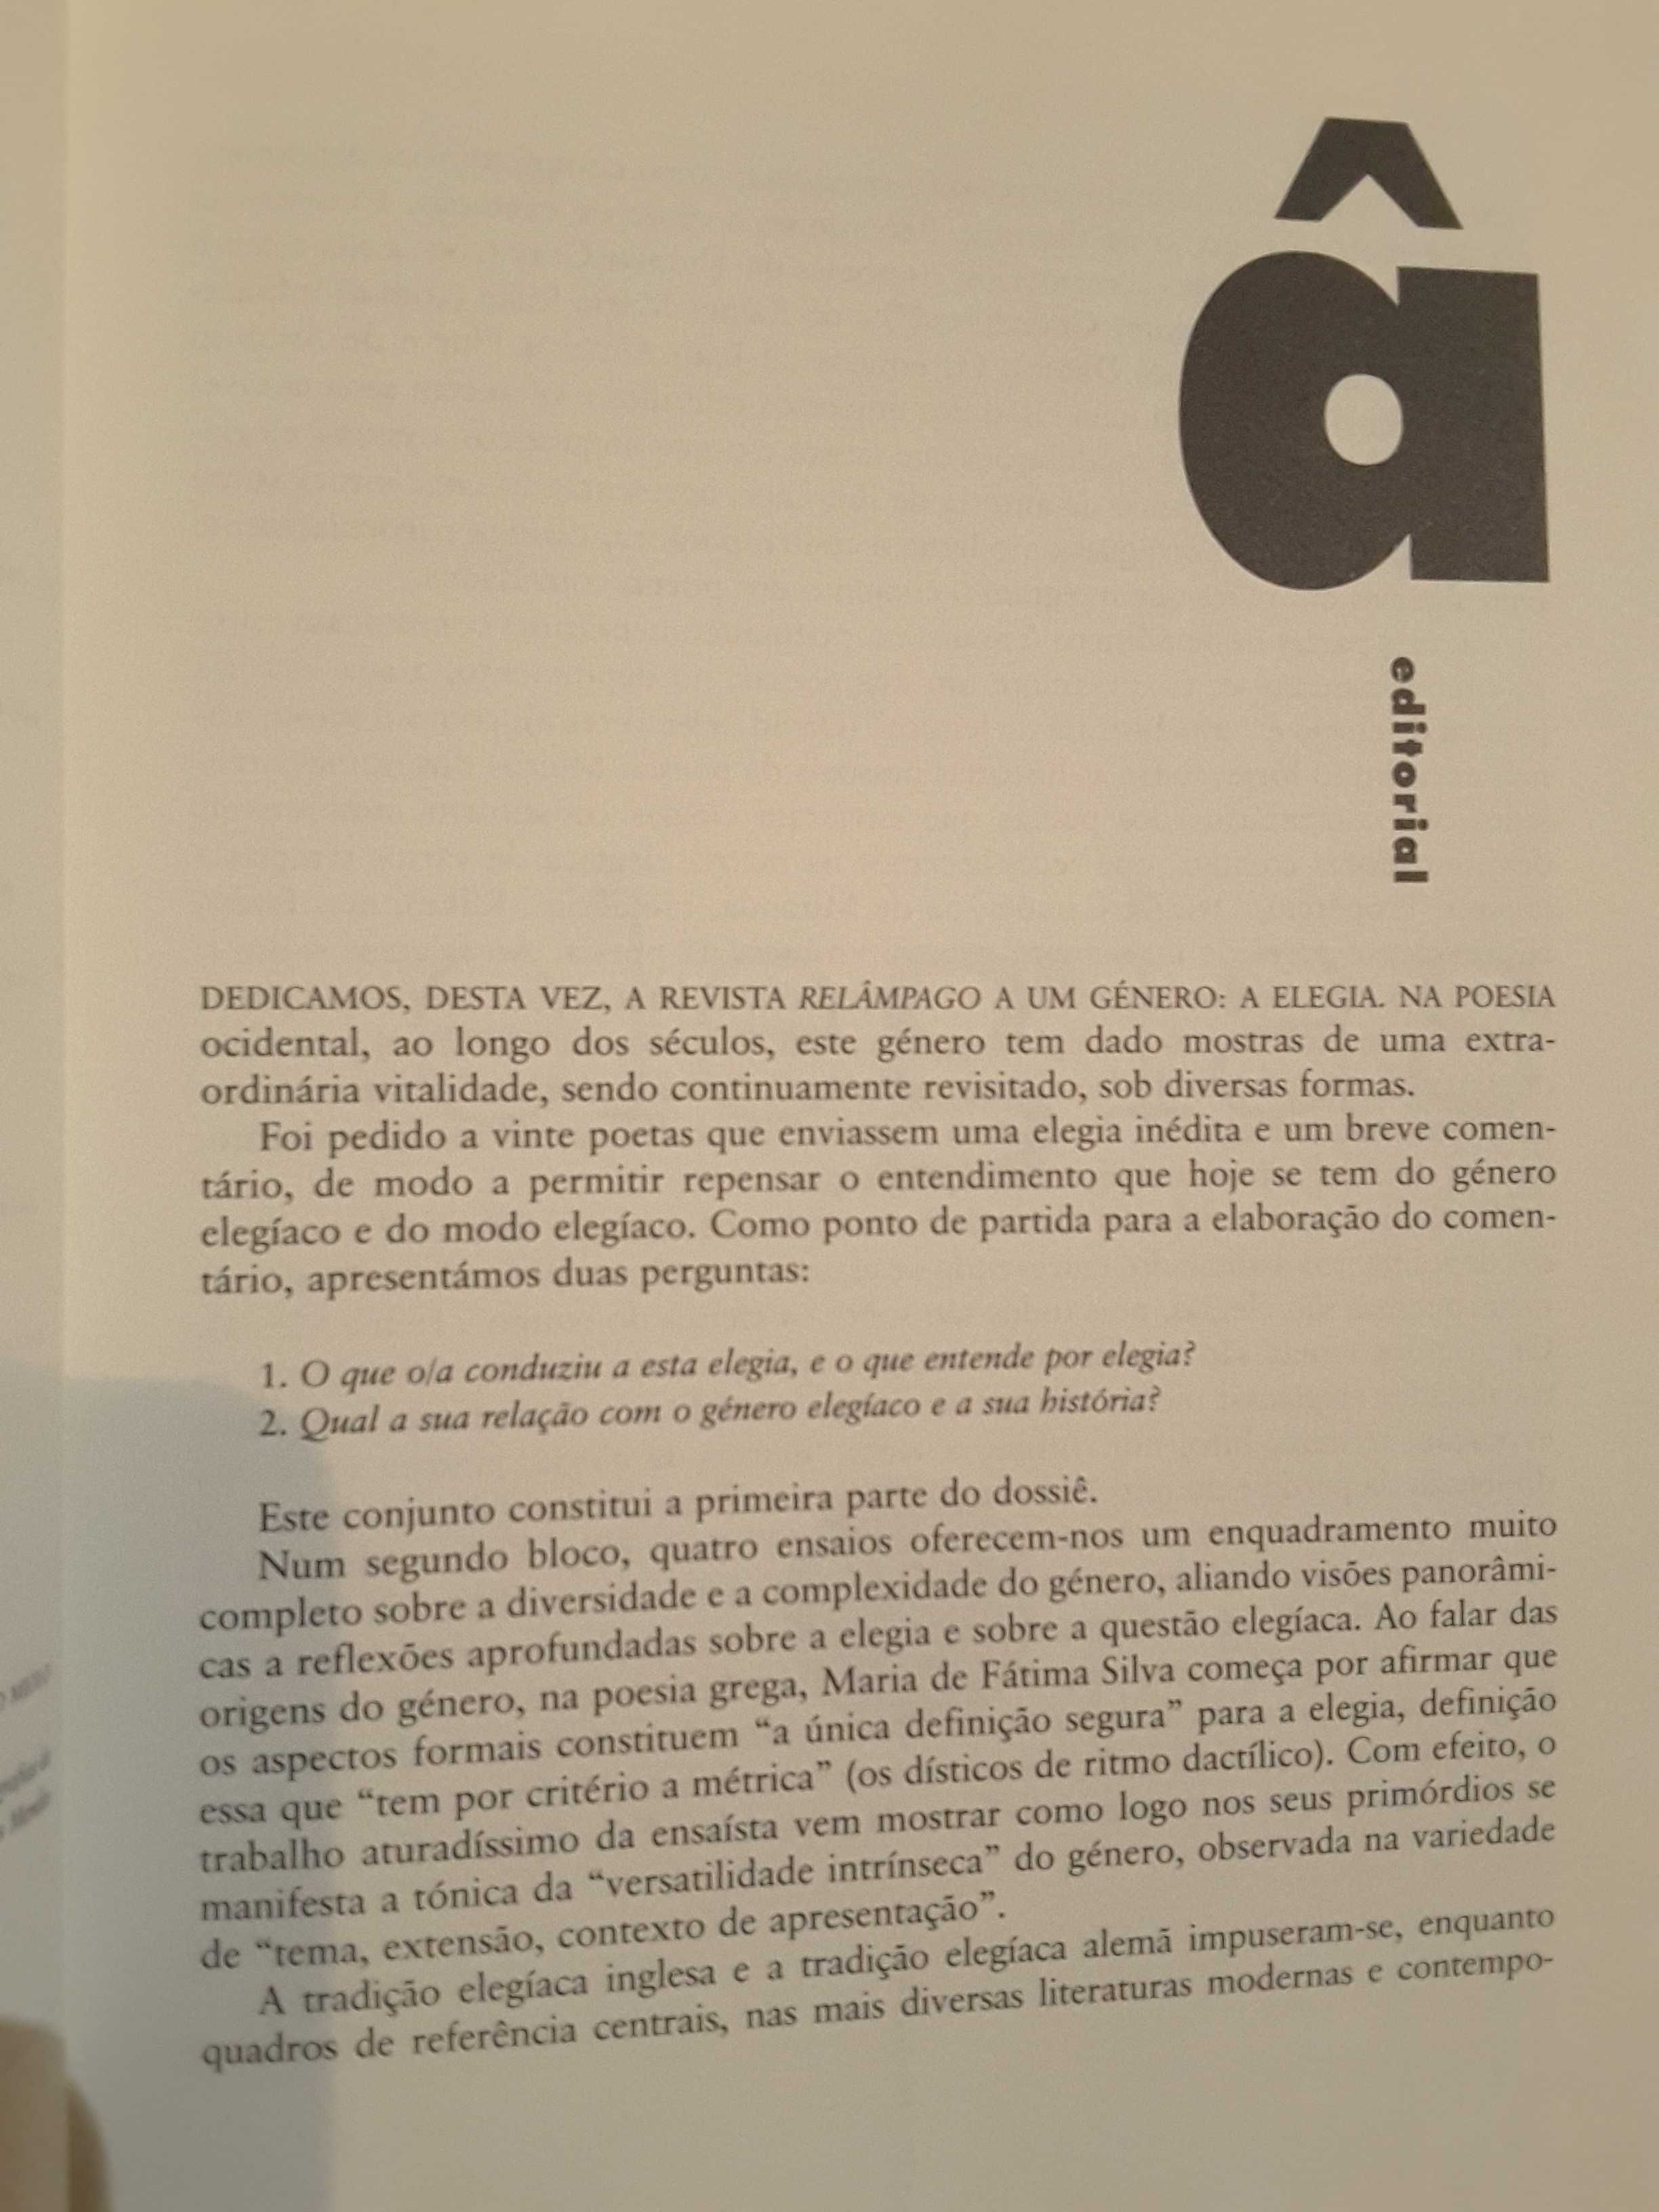 Tolentino Mendonça / Relâmpago, Revista de Poesia (Elegias)